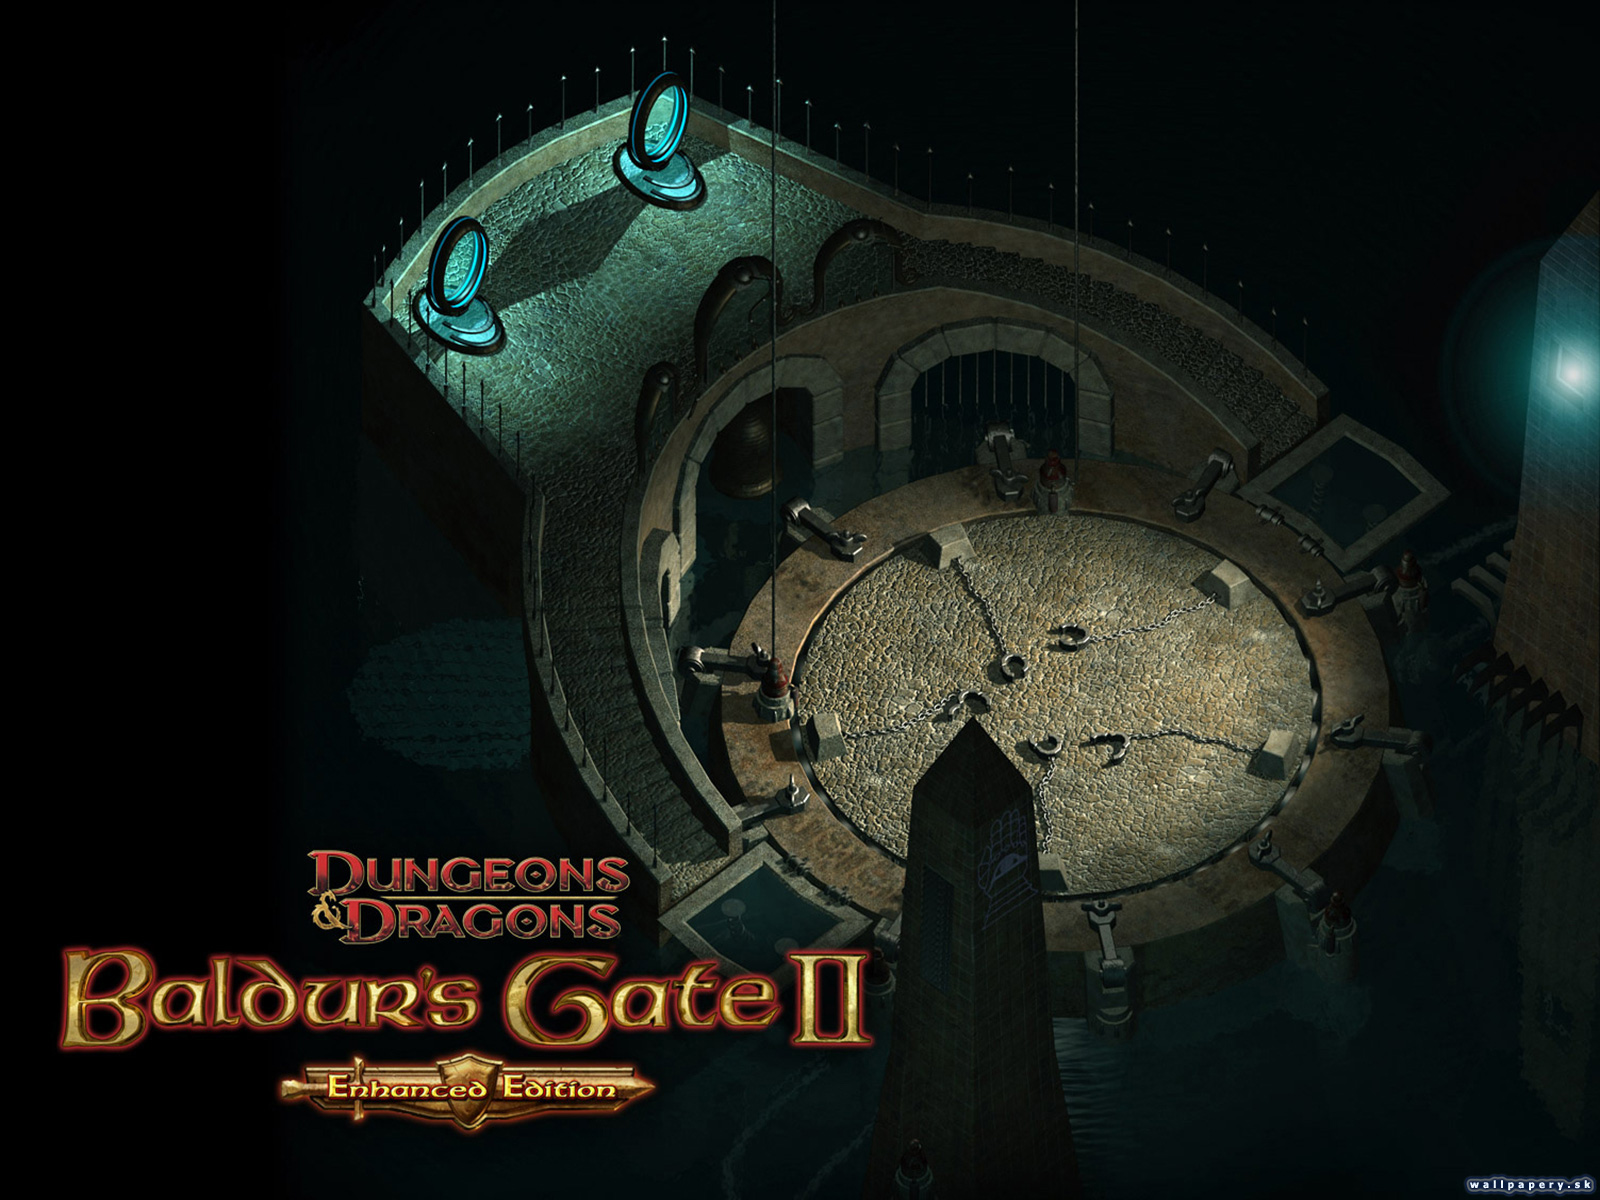 Baldur's Gate II: Enhanced Edition - wallpaper 6